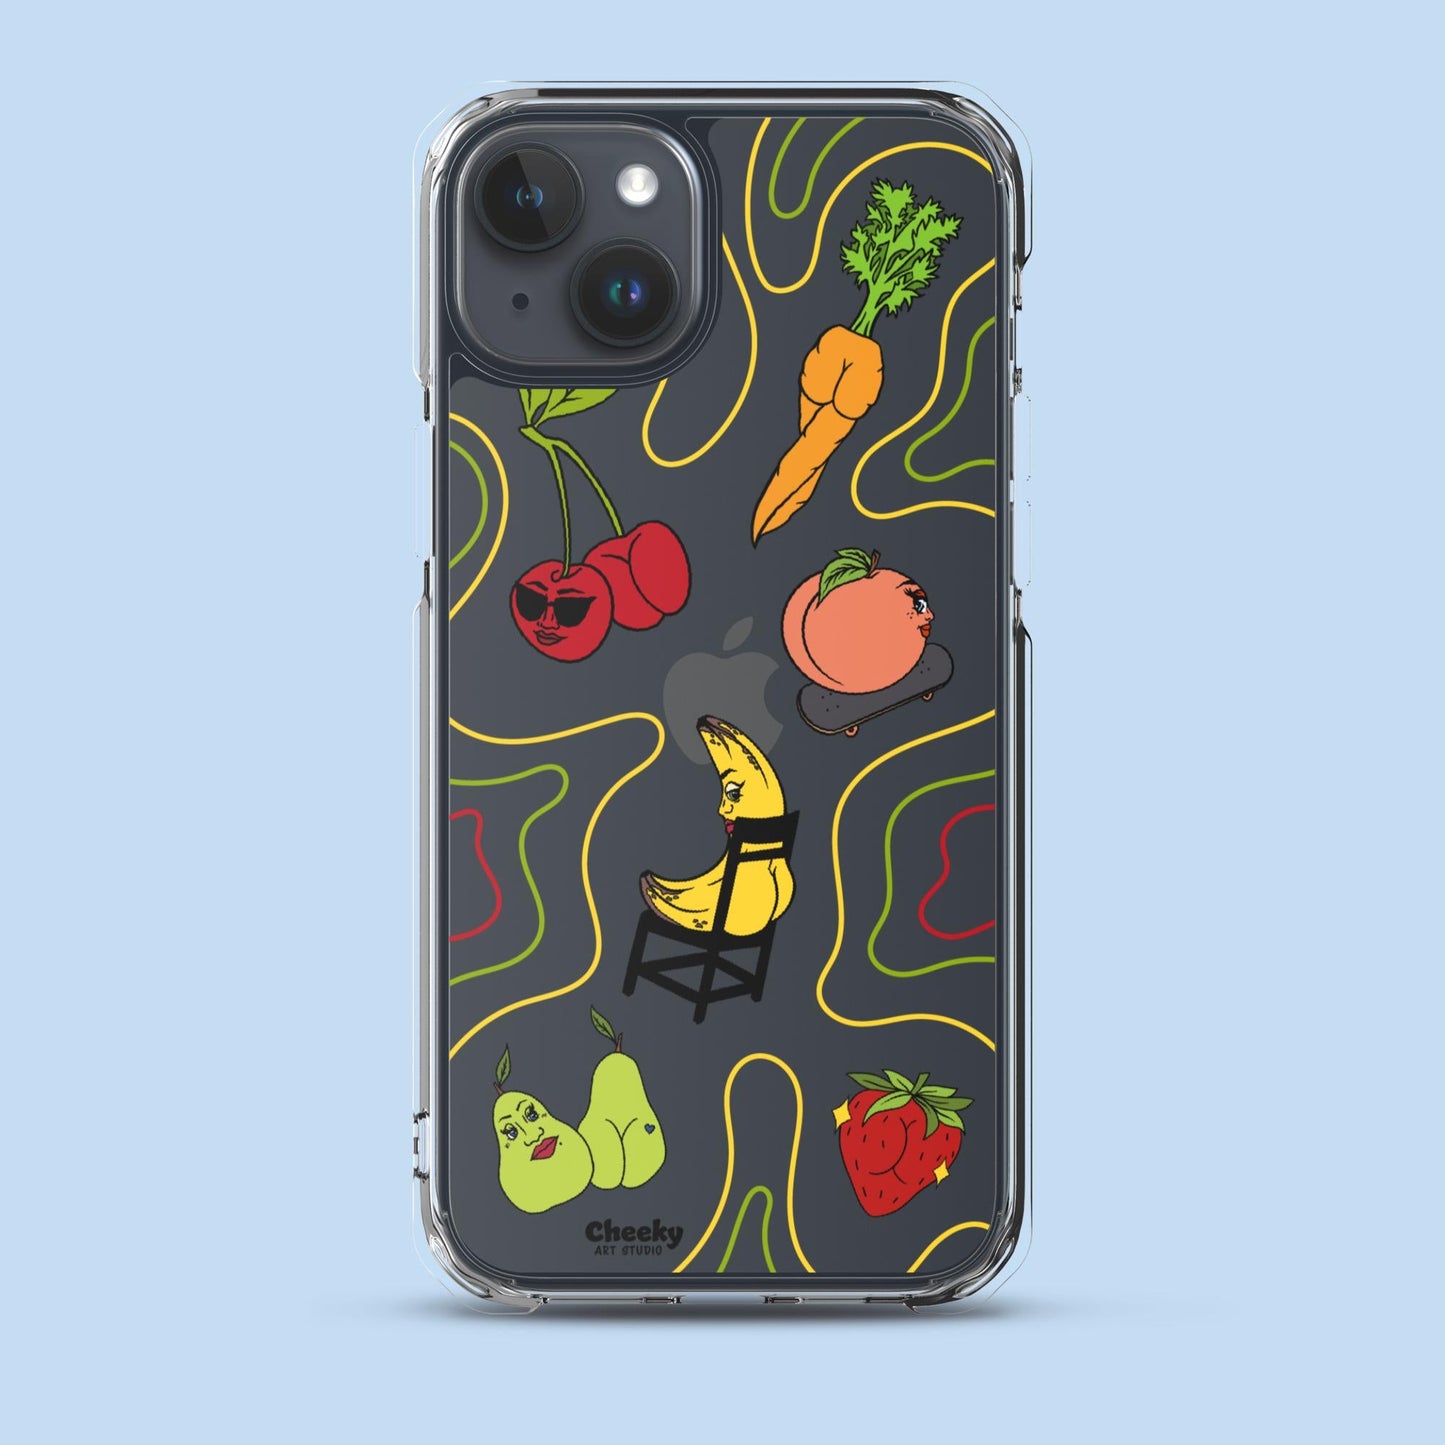 Foodie Booties Clear Phone Case - Cheeky Art Studio-banana-carrot-cherry